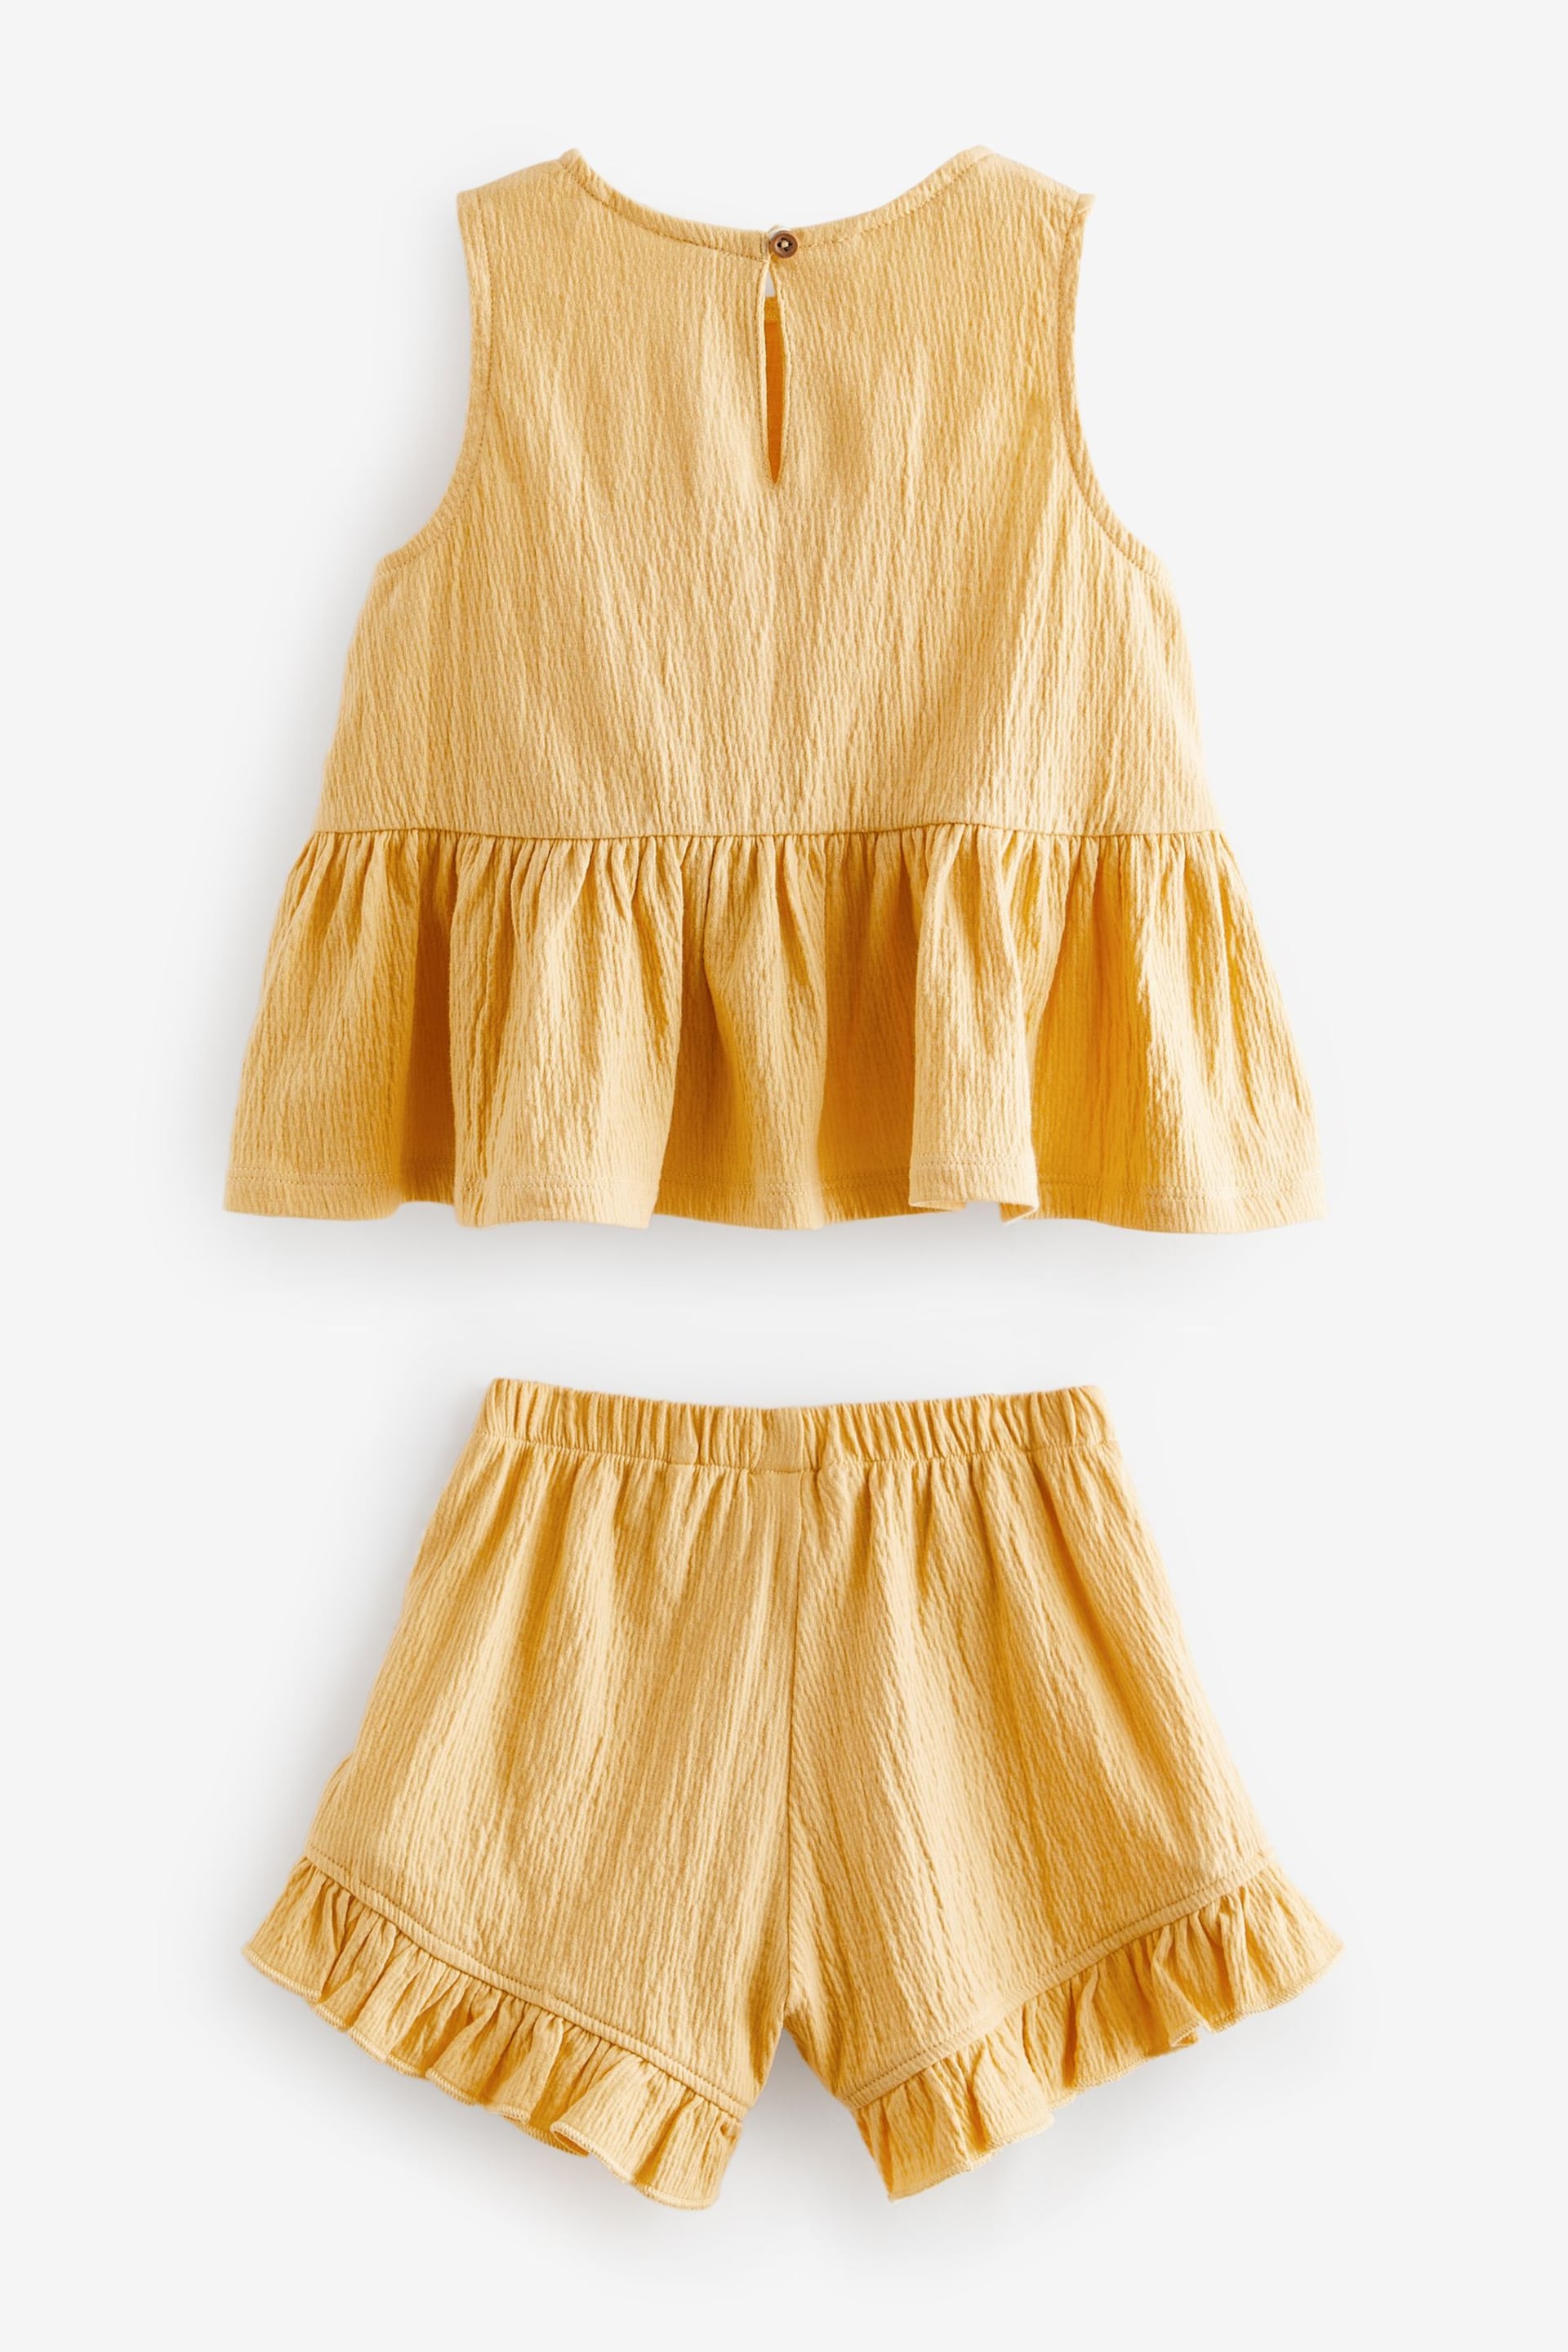 Yellow Textured Sleeveless Peplum Top and Shorts Set (3mths-7yrs) - Image 2 of 3